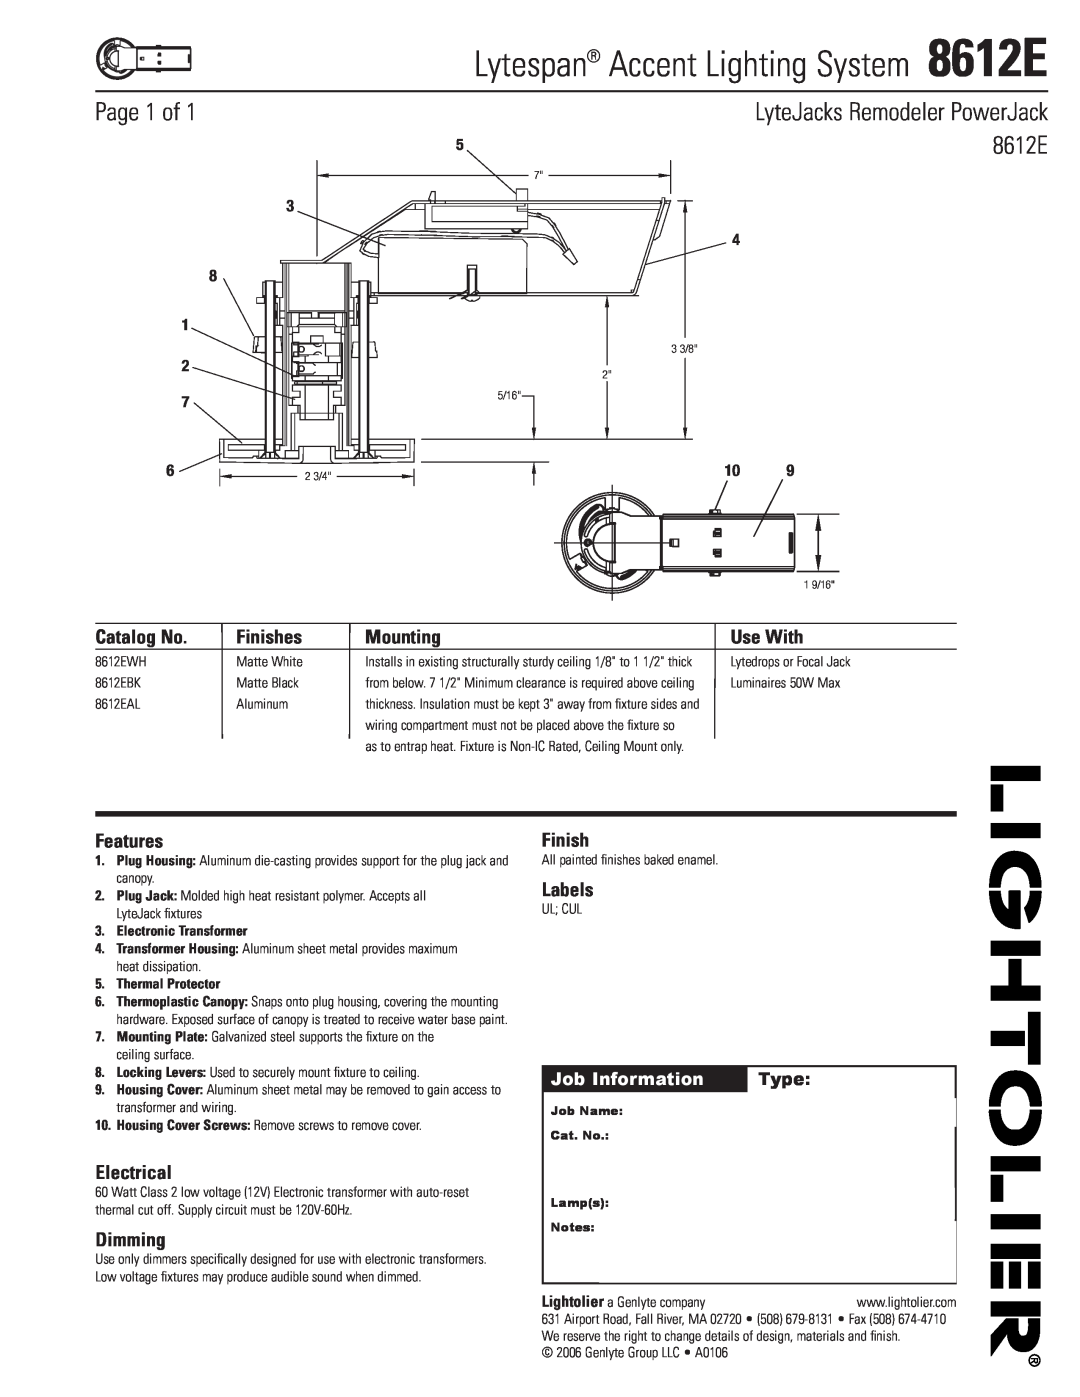 Lightolier manual Lytespan Accent Lighting System 8612E, Page 1 of, LyteJacks Remodeler PowerJack 8612E, Catalog No 